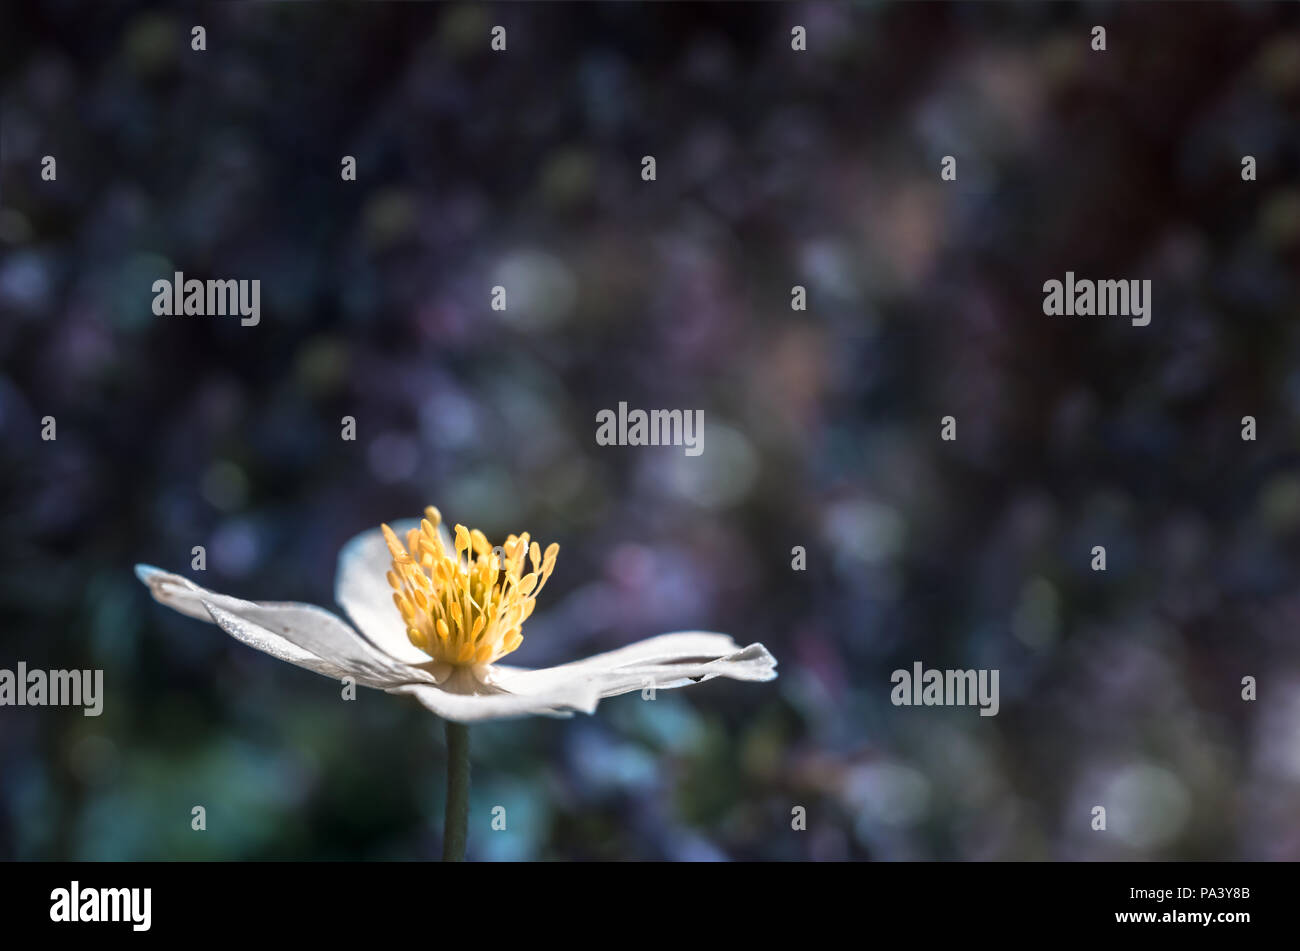 White blossom, bokeh background, high contrast Stock Photo